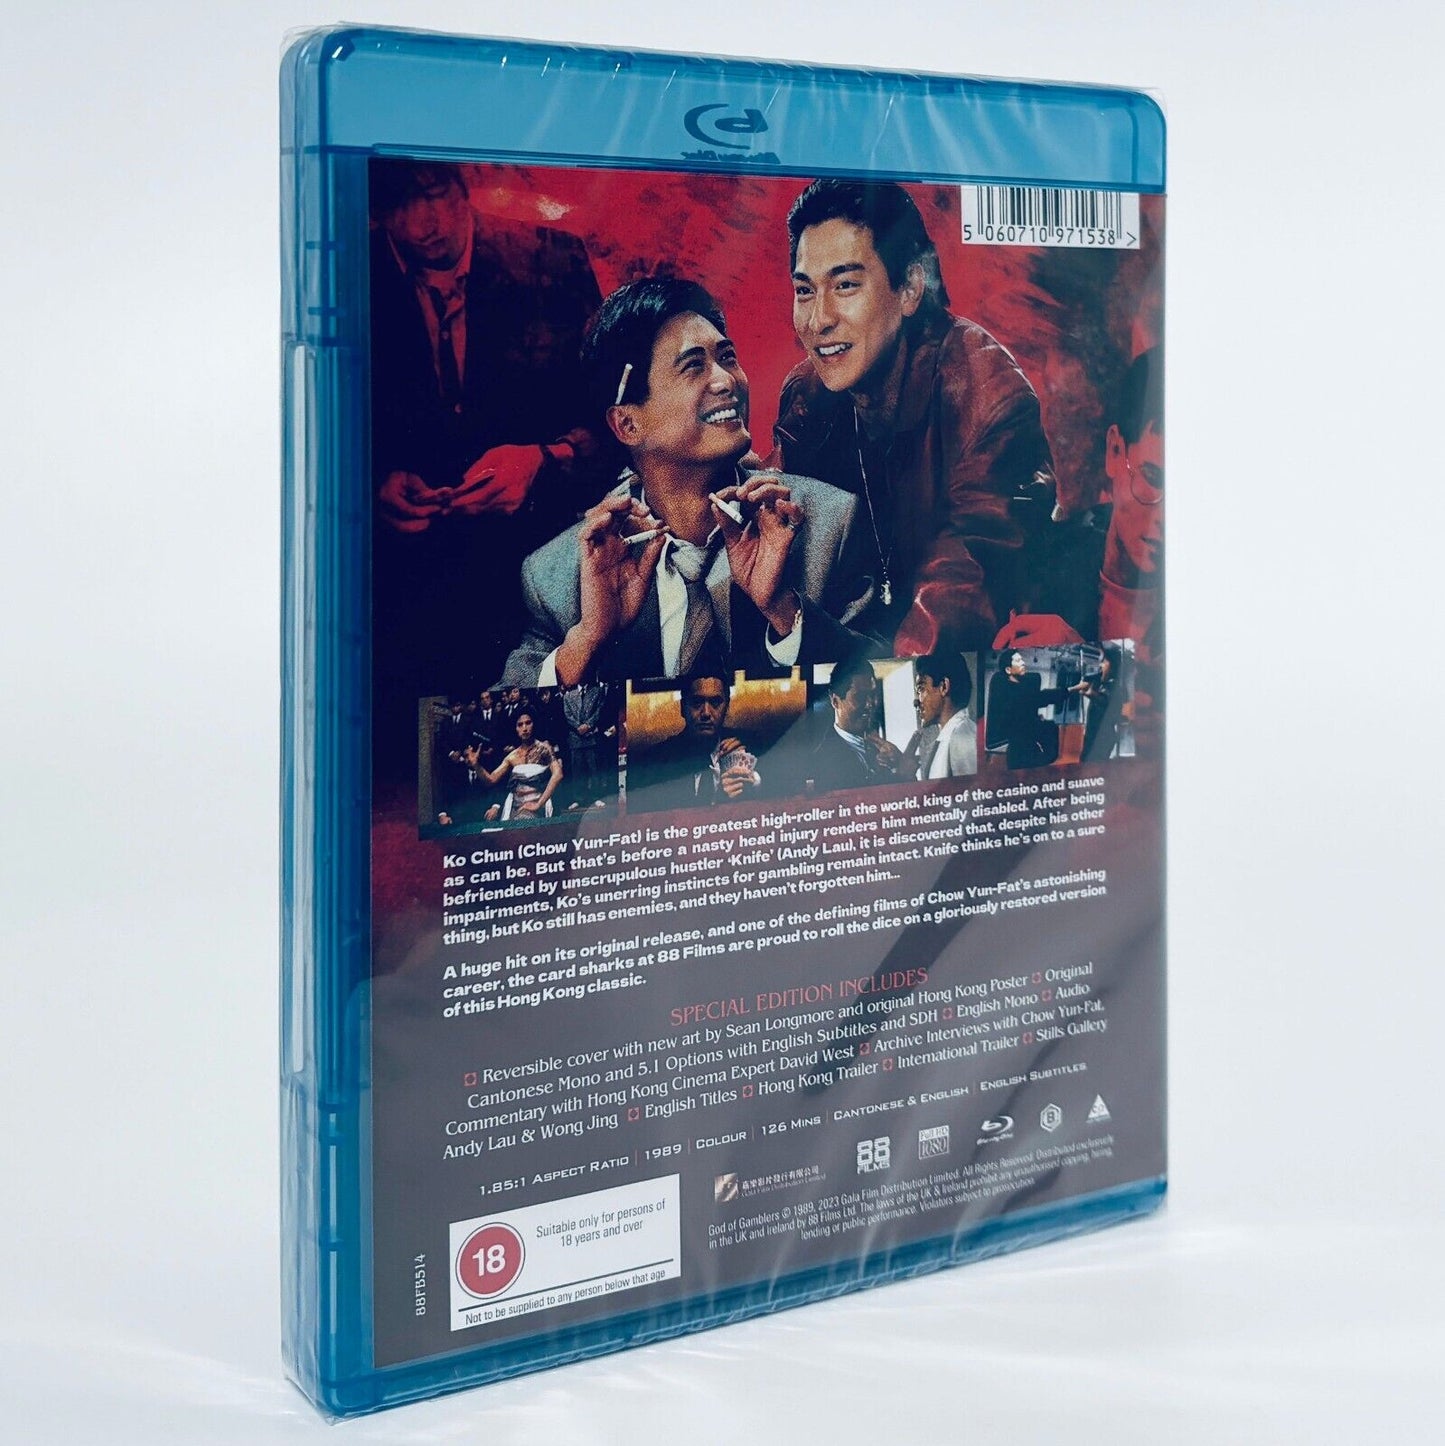 God of Gamblers Chow Yun Fat Standard Edition Region B Blu-ray 88 Films UK